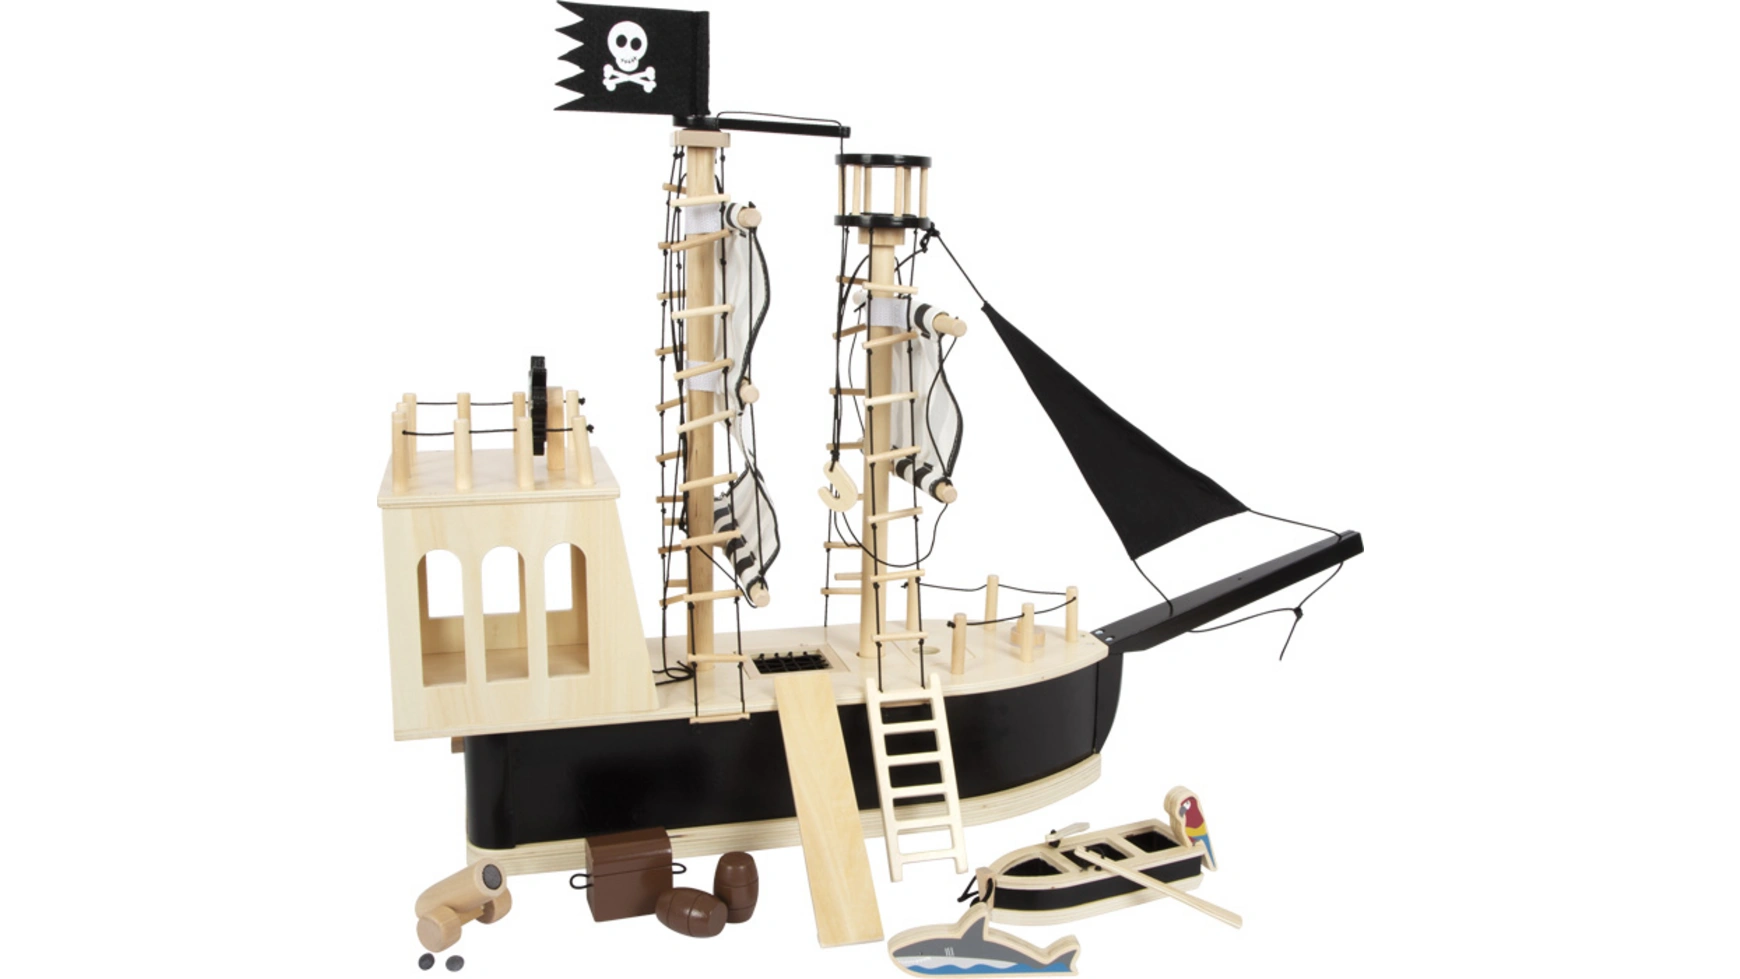 пиратский корабль Small Foot конструктор mould king 13109 пиратский корабль 3139 деталей